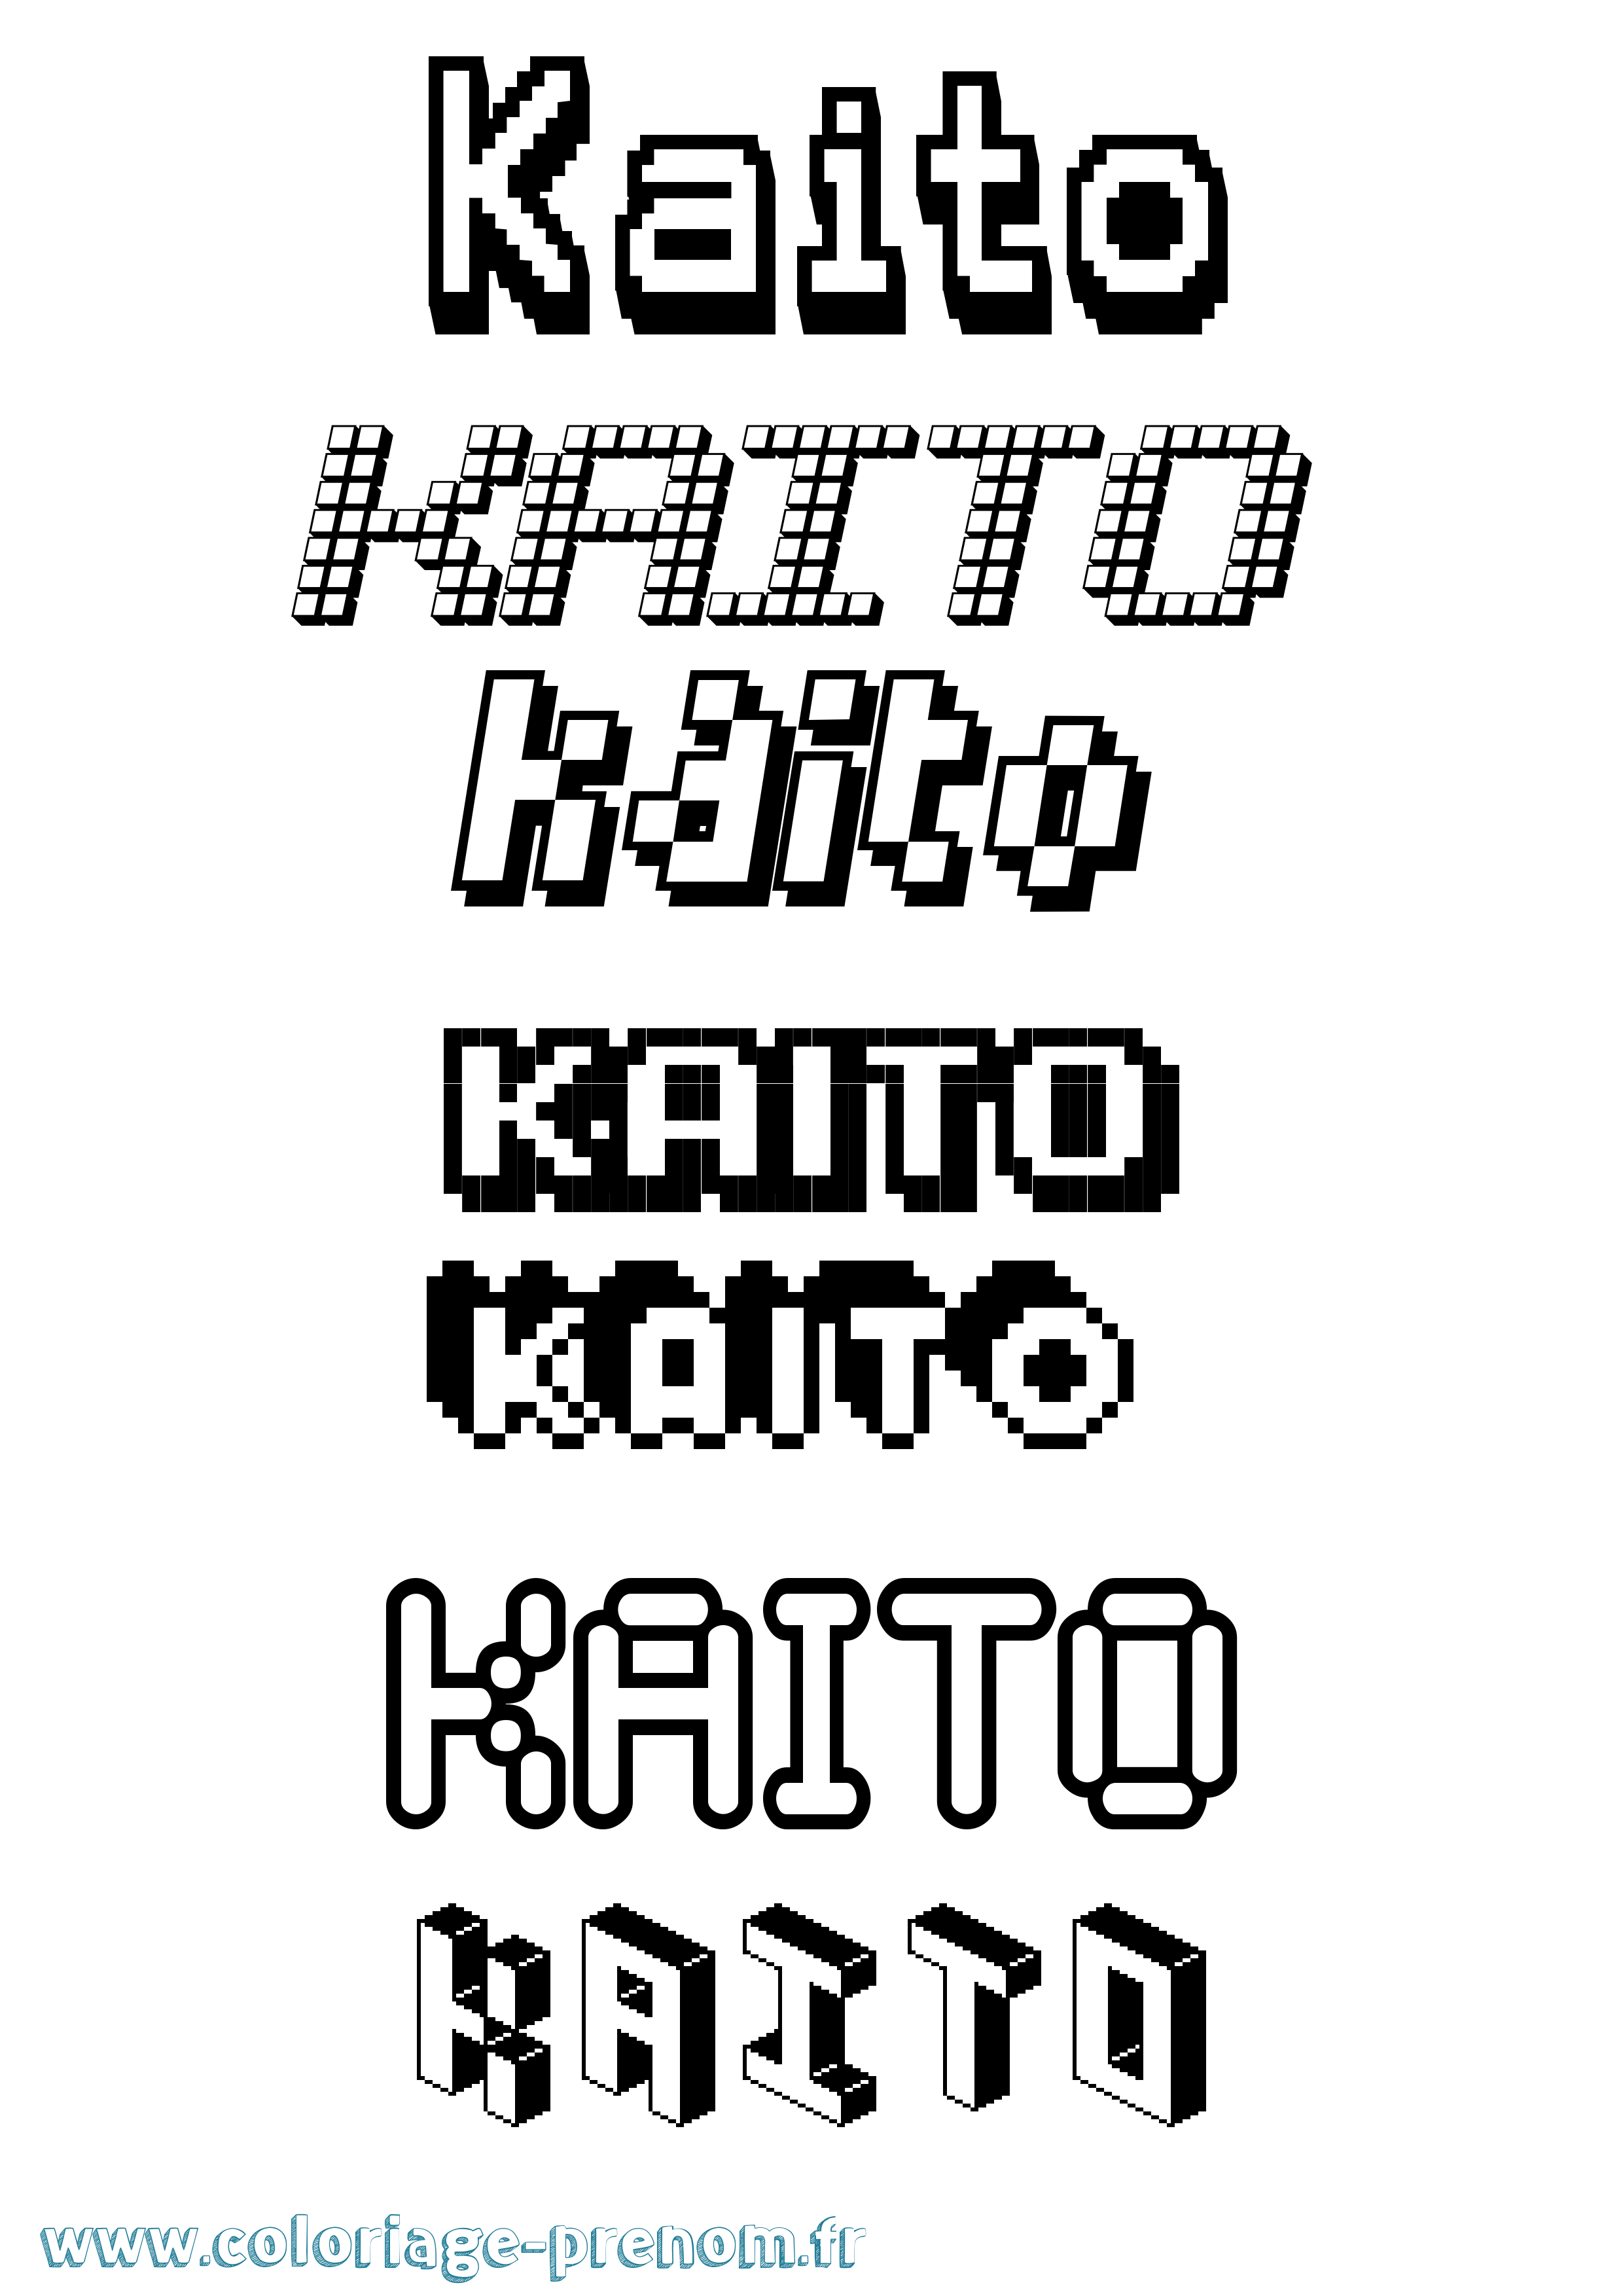 Coloriage prénom Kaito Pixel